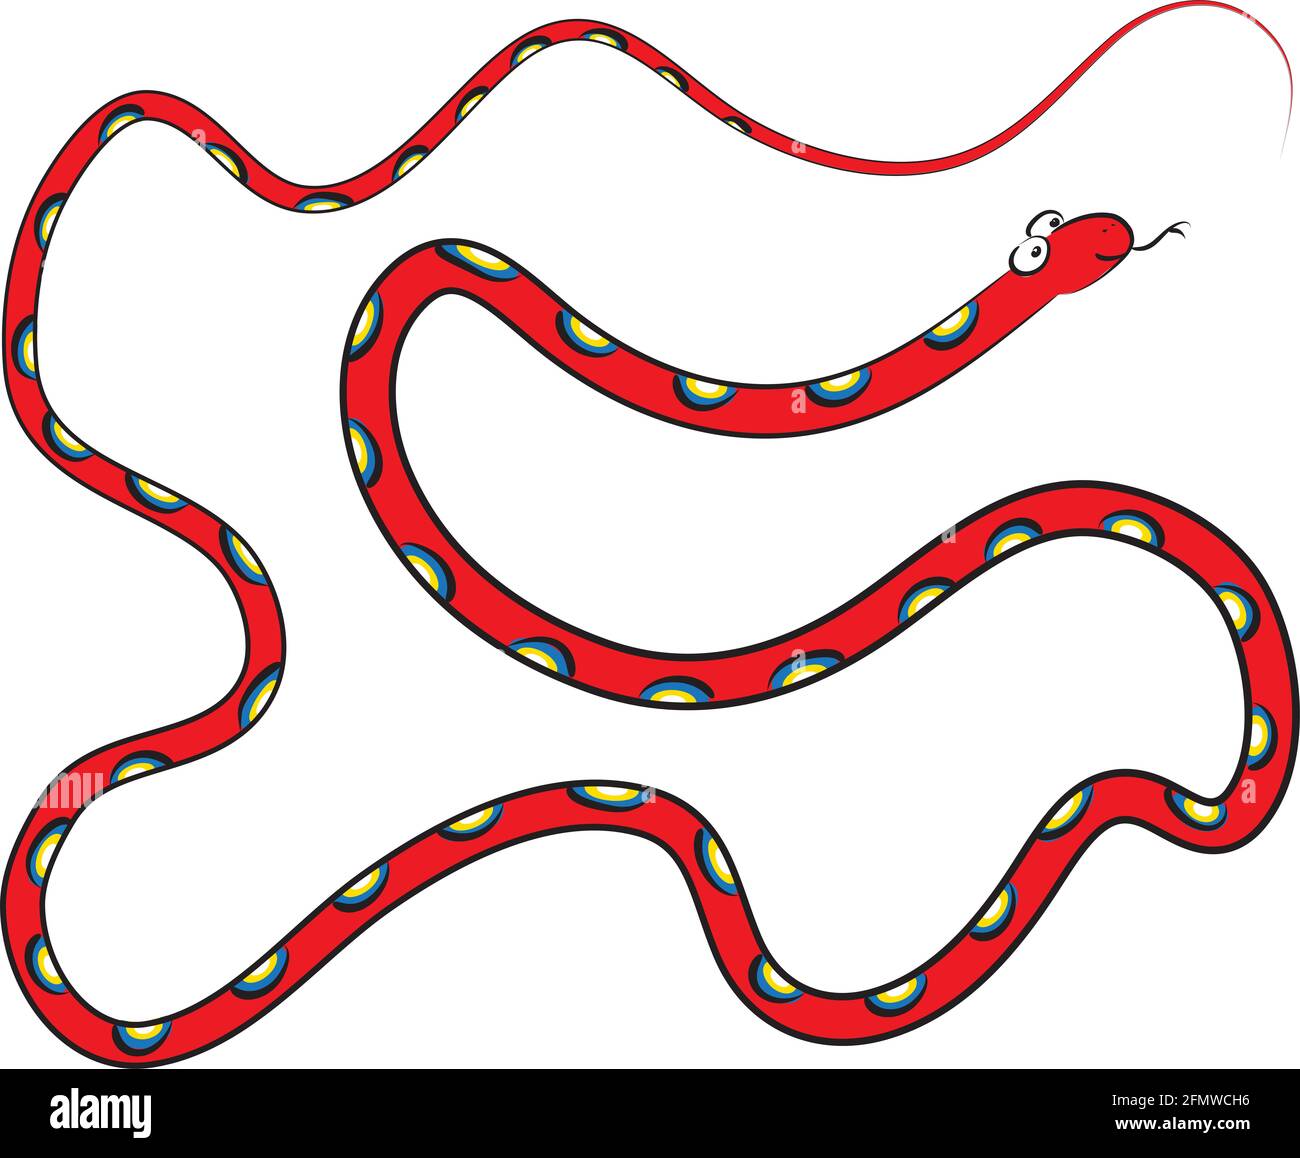 colourful cartoon long snake Stock Photo